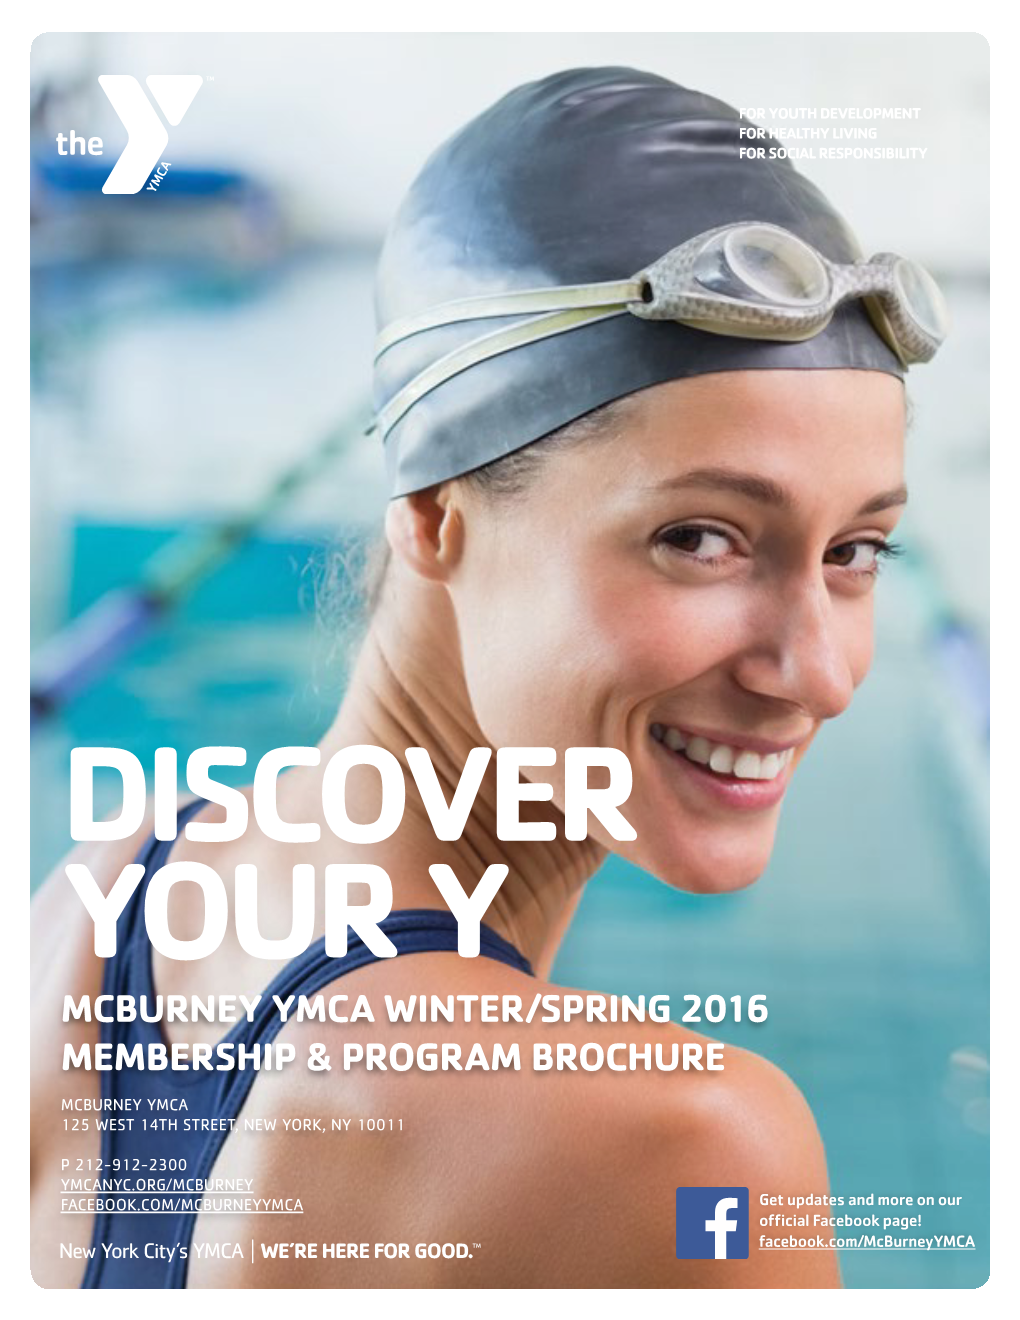 Mcburney Ymca Winter/Spring 2016 Membership & Program Brochure